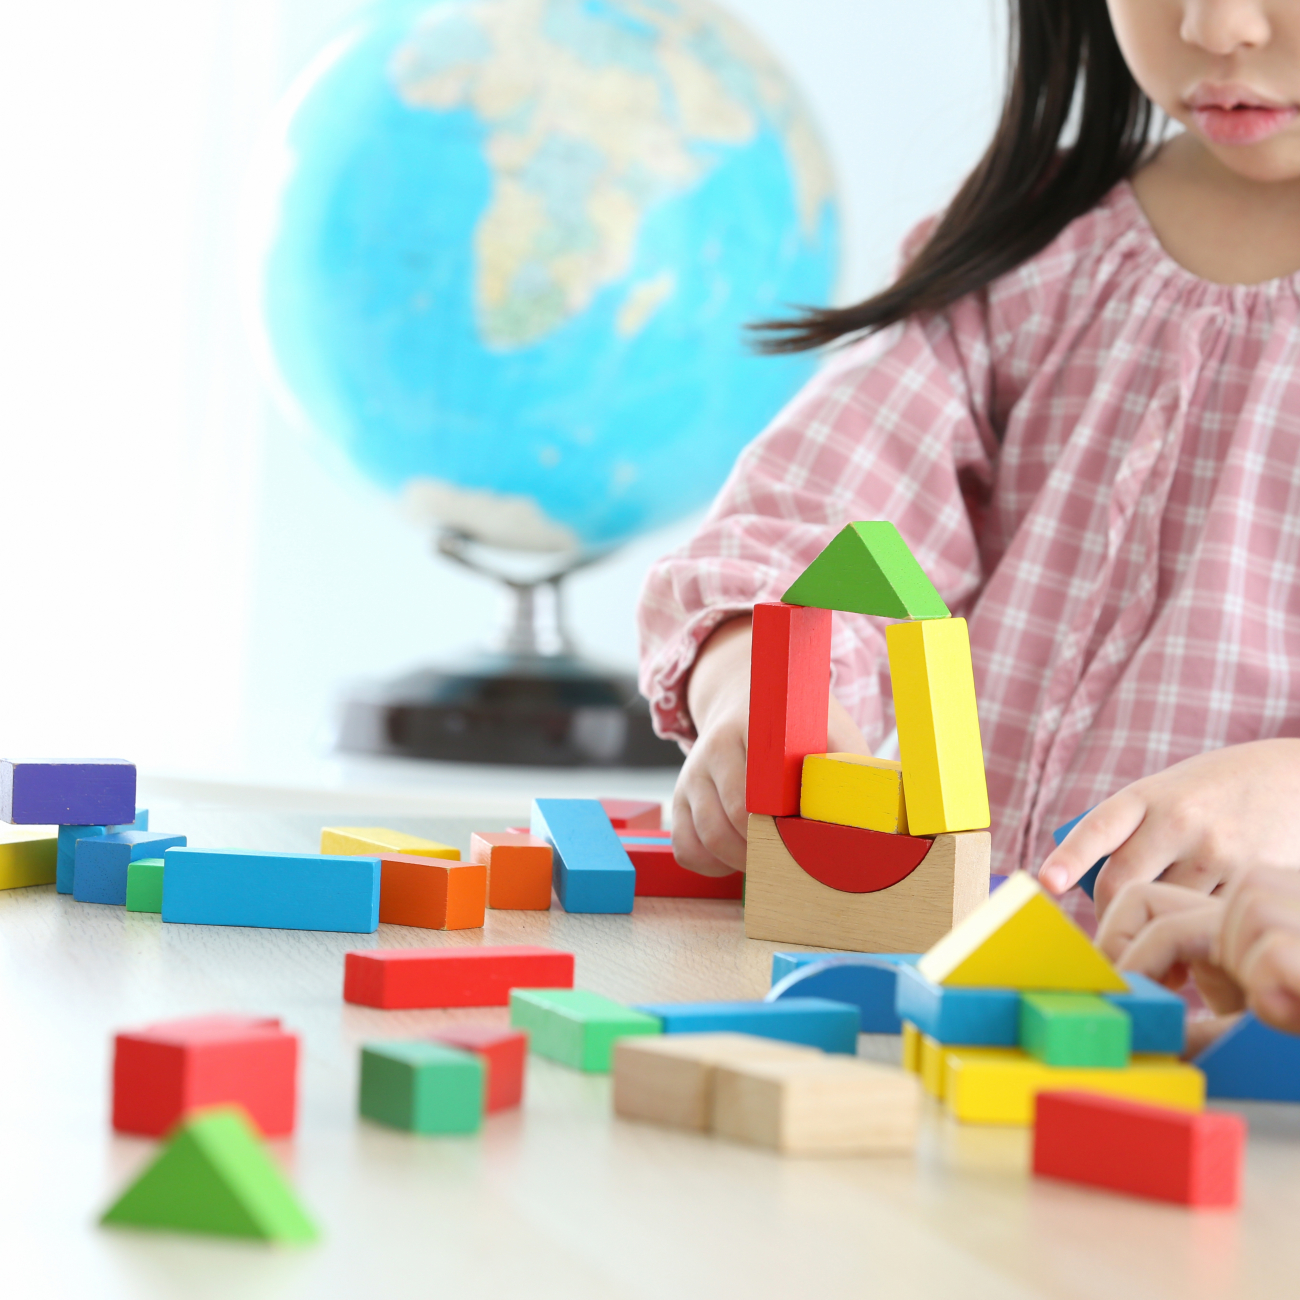 Preschool child playing with blocks